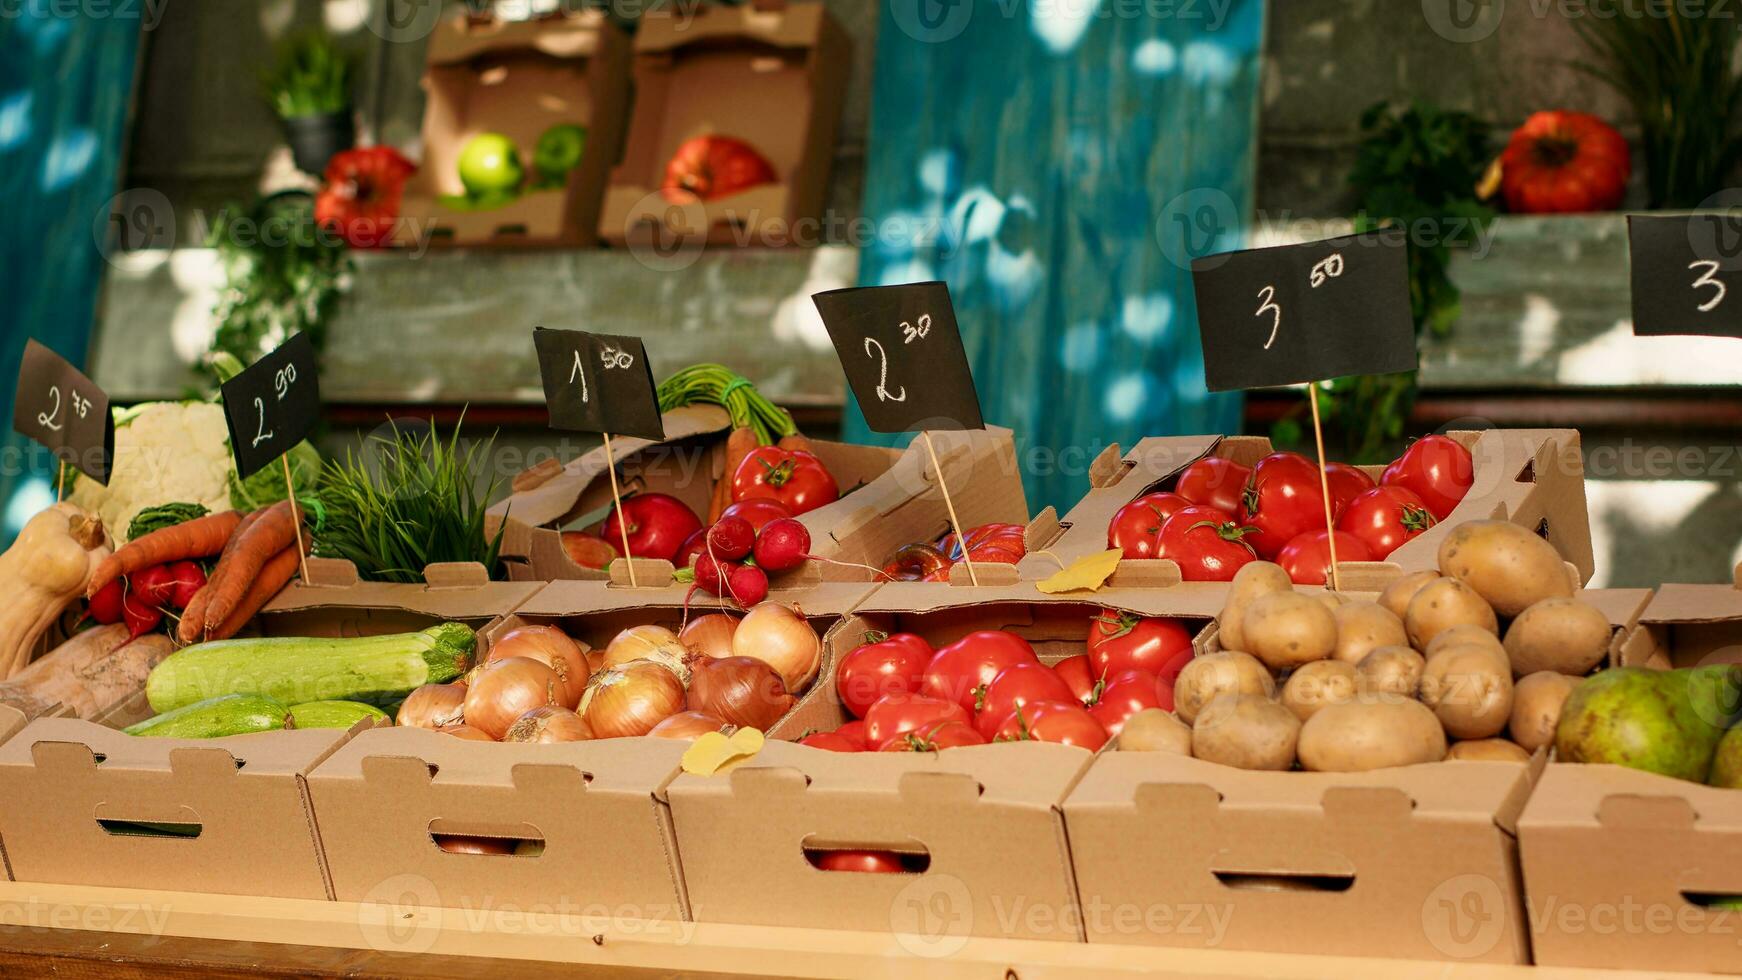 natural vistoso Fresco frutas y verduras en monitor a agricultores mercado foto